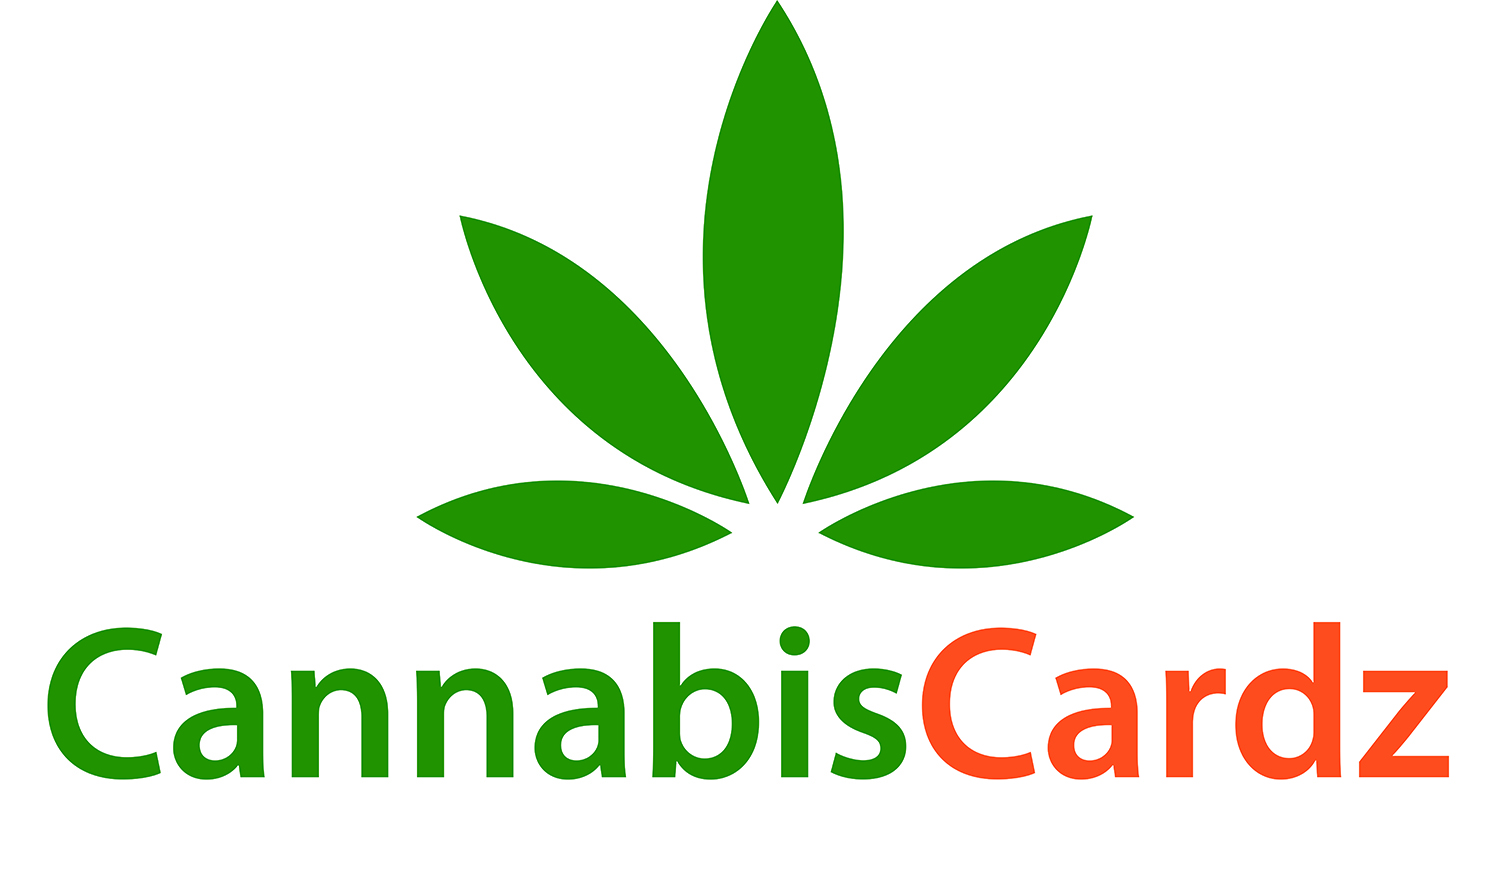 Cannabis Cardz - Your Trusted Partner for Medical Cannabis